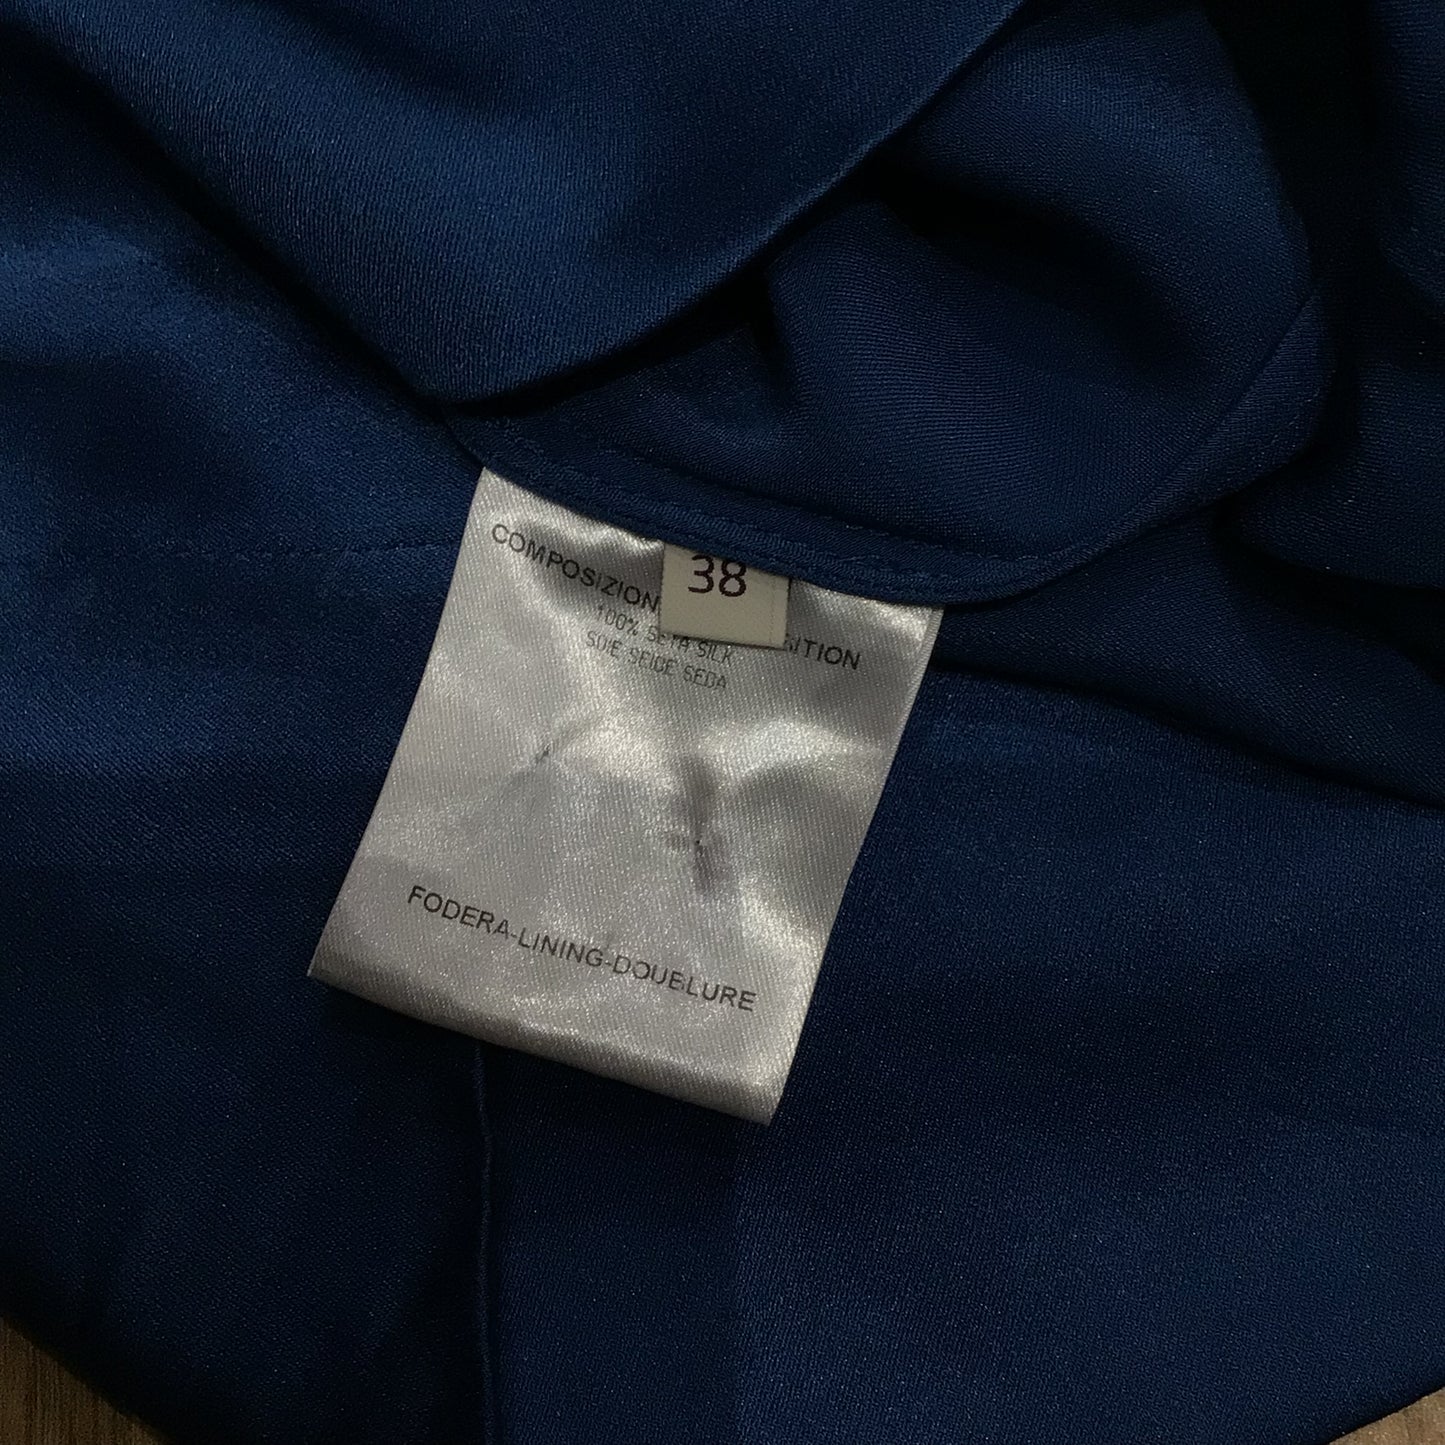 Stella McCartney Off Shoulder Asymmetrical 100% Silk Blue Dress Size 10